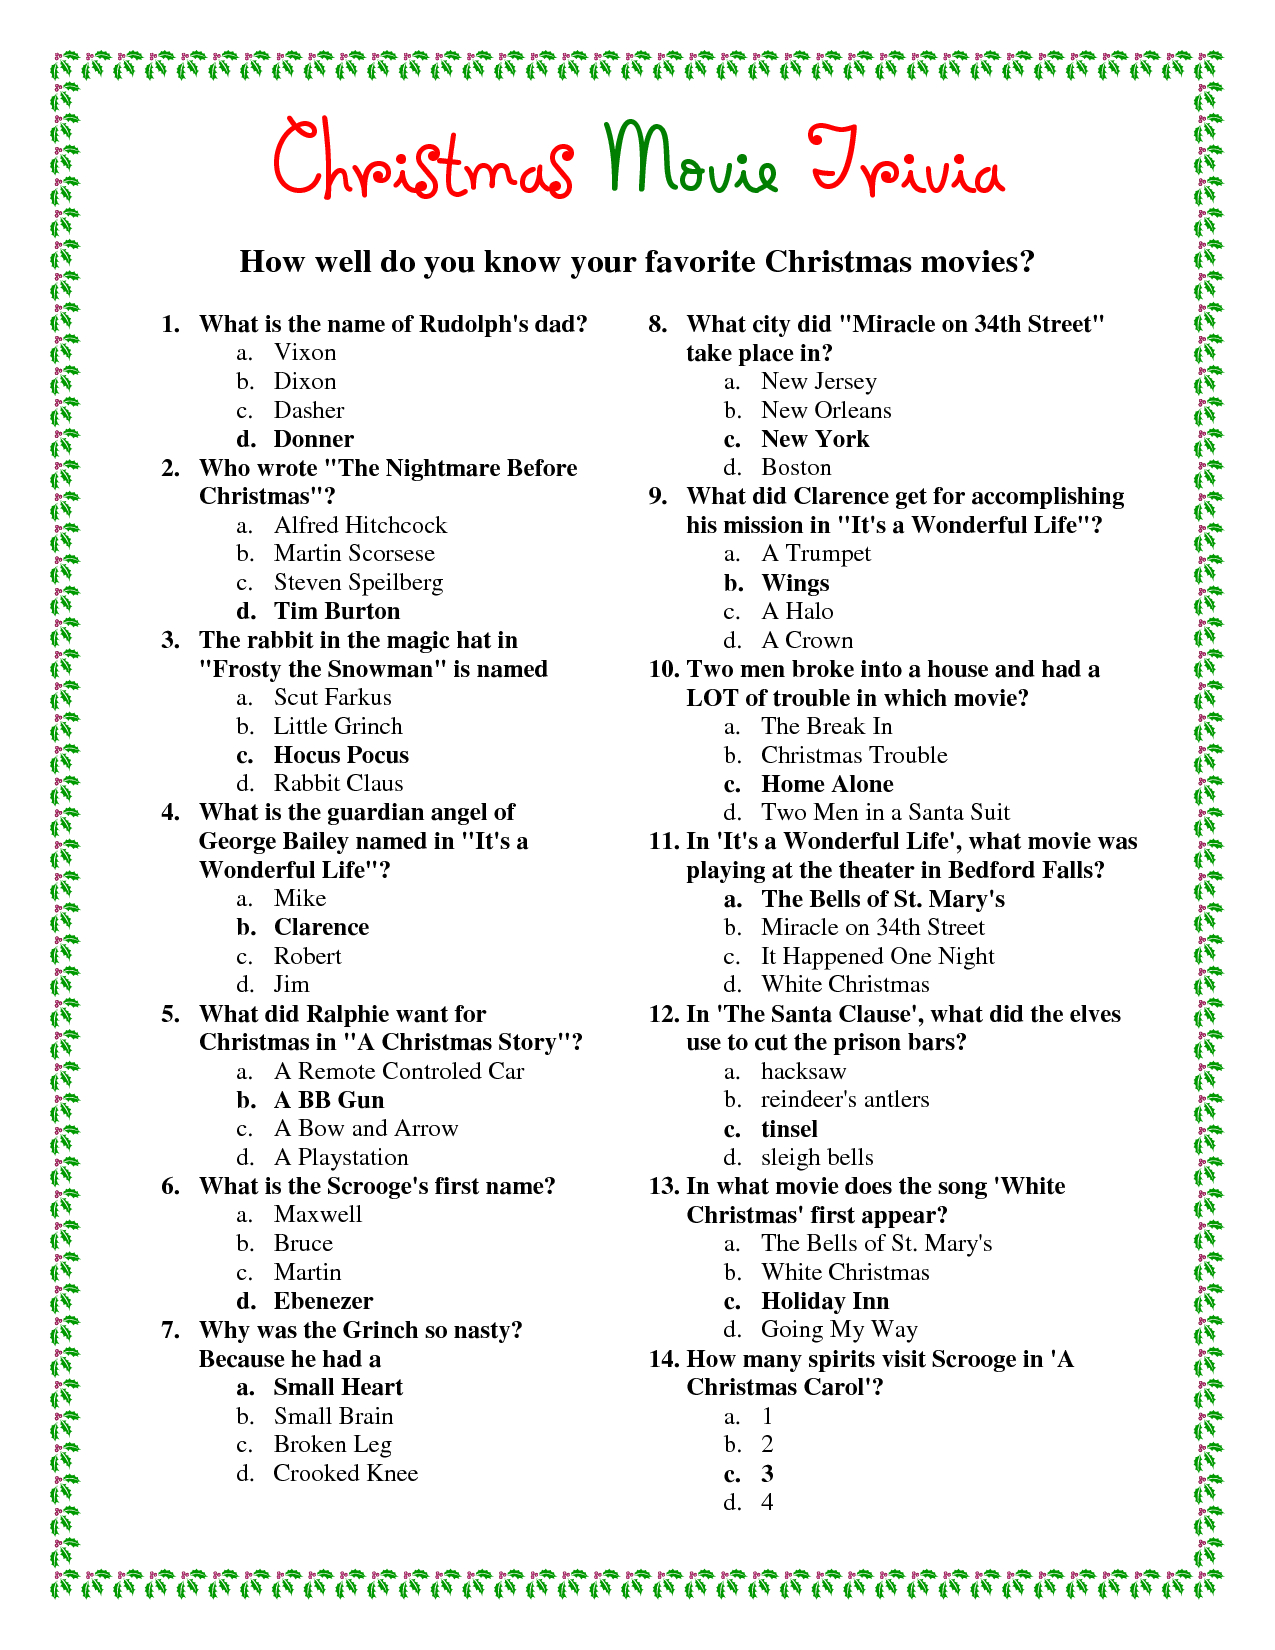 Ideas Collection Easy Christmas Trivia Questions And Answers - Halloween Trivia Questions And Answers Free Printable